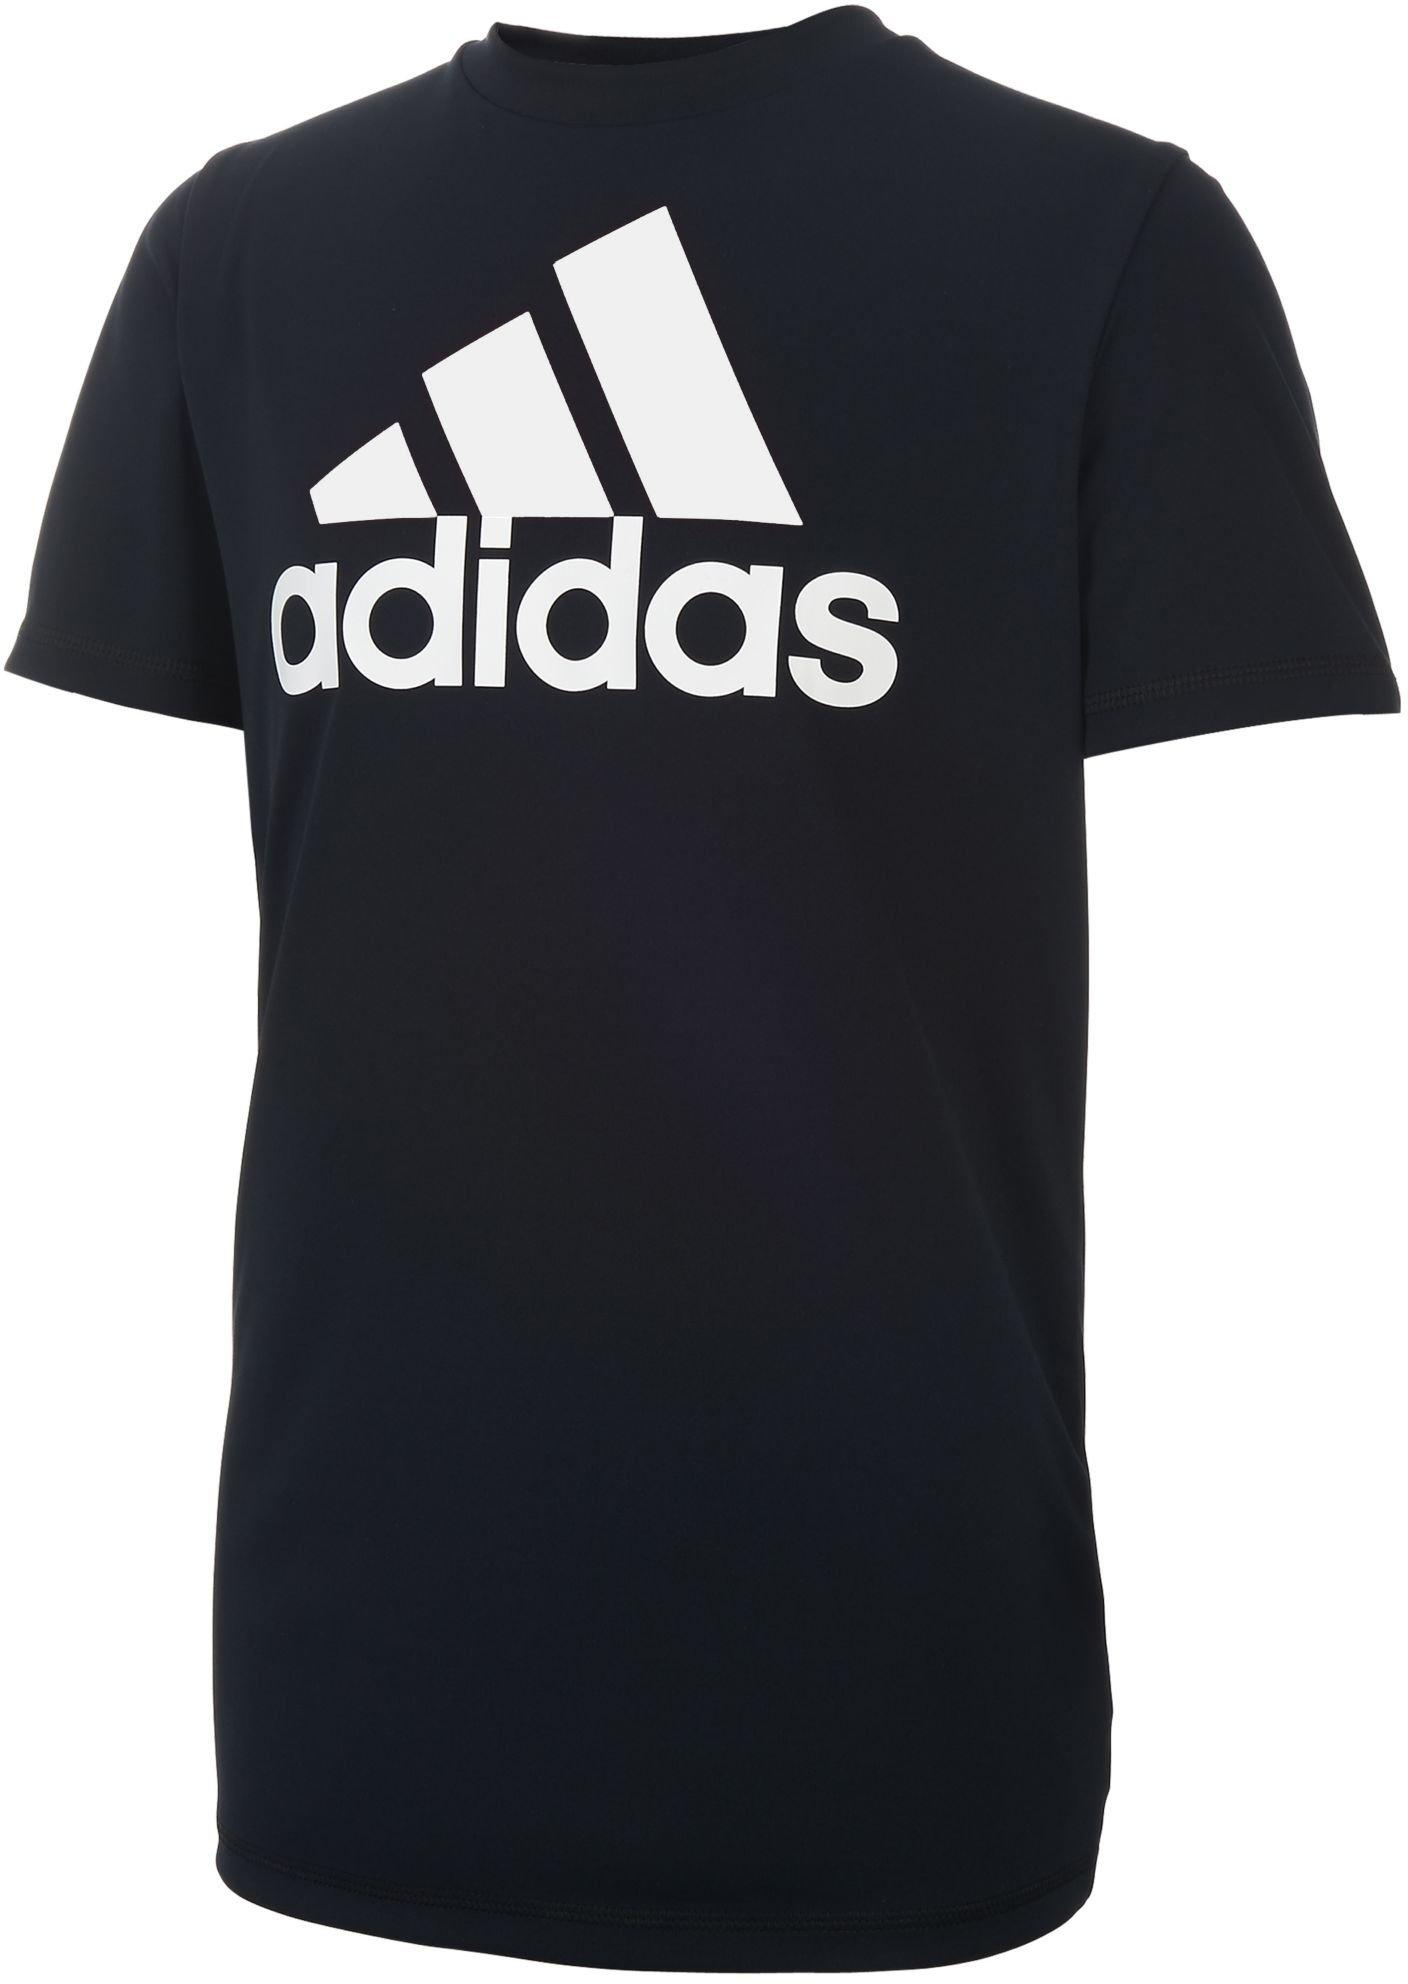 Adidas Black Tshirt | Bealls Florida